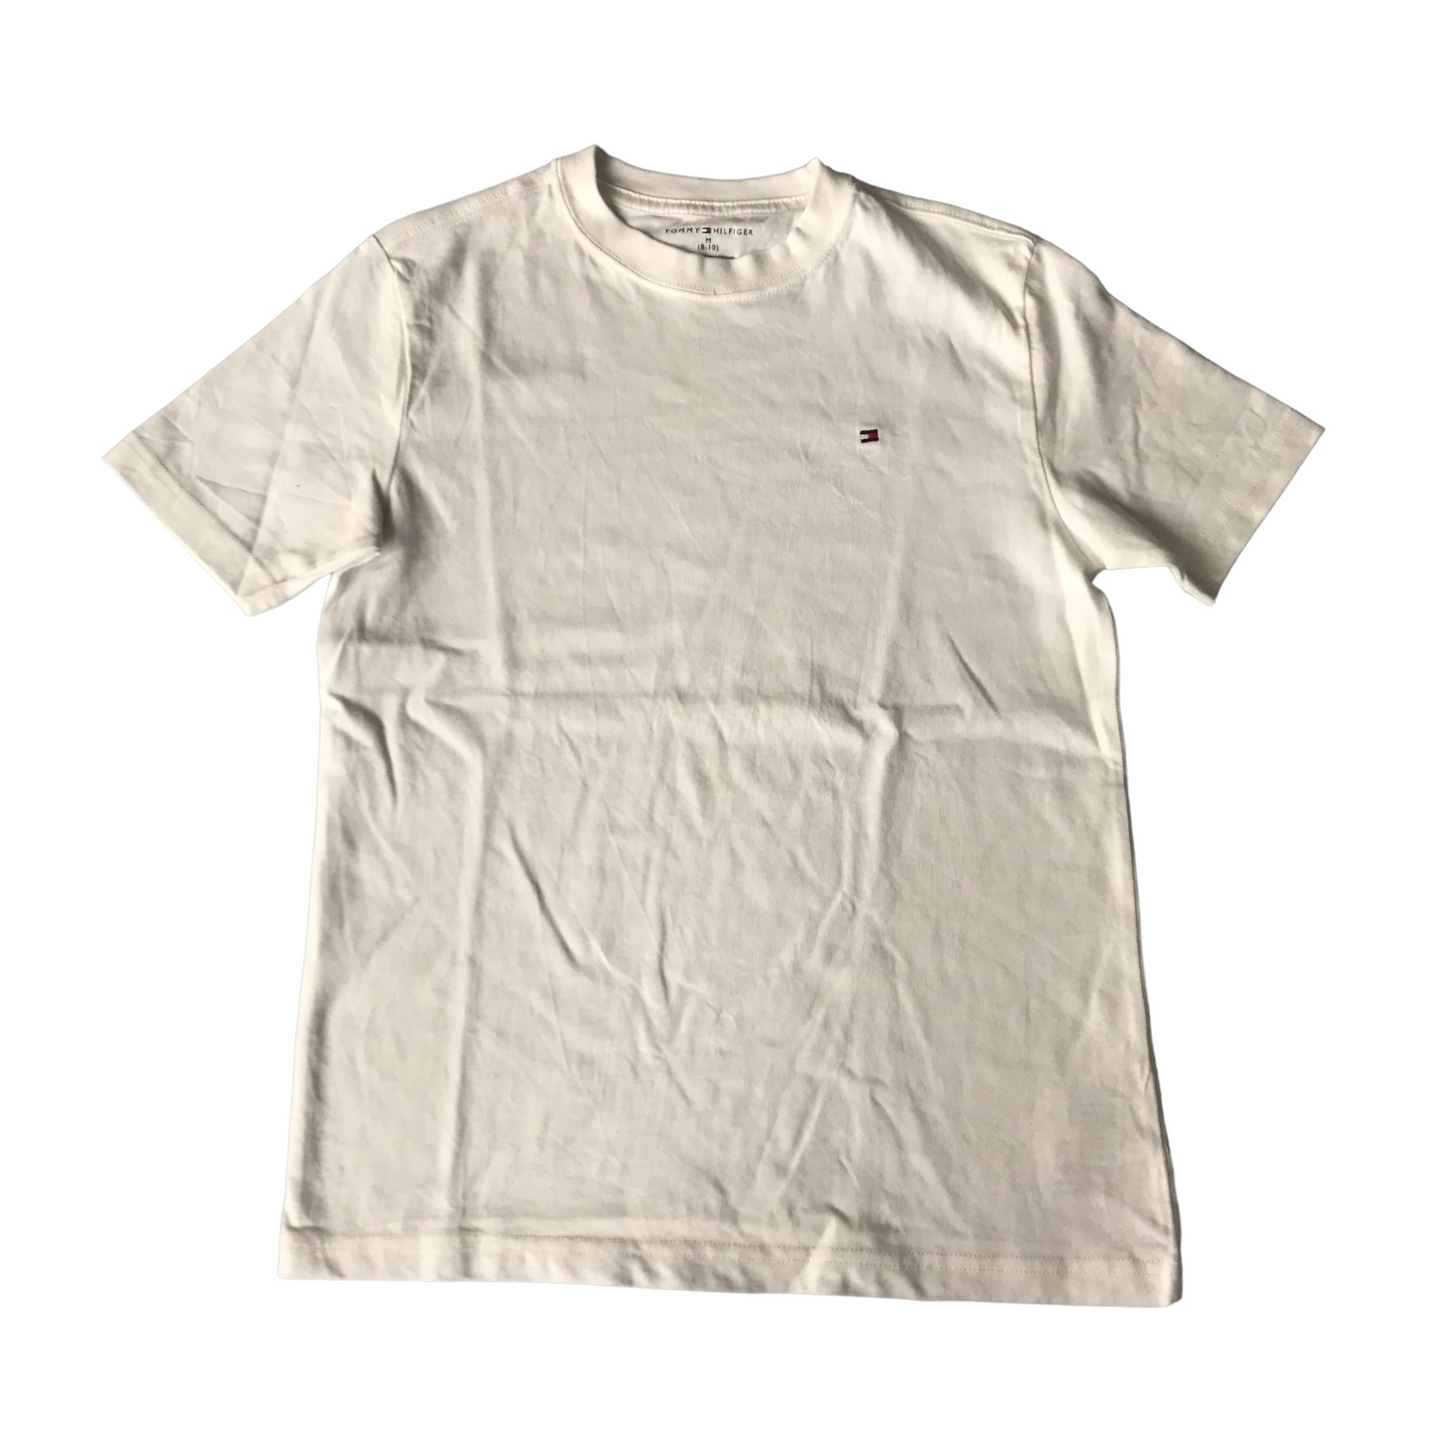 Tommy Hilfiger White T-Shirt Age 9